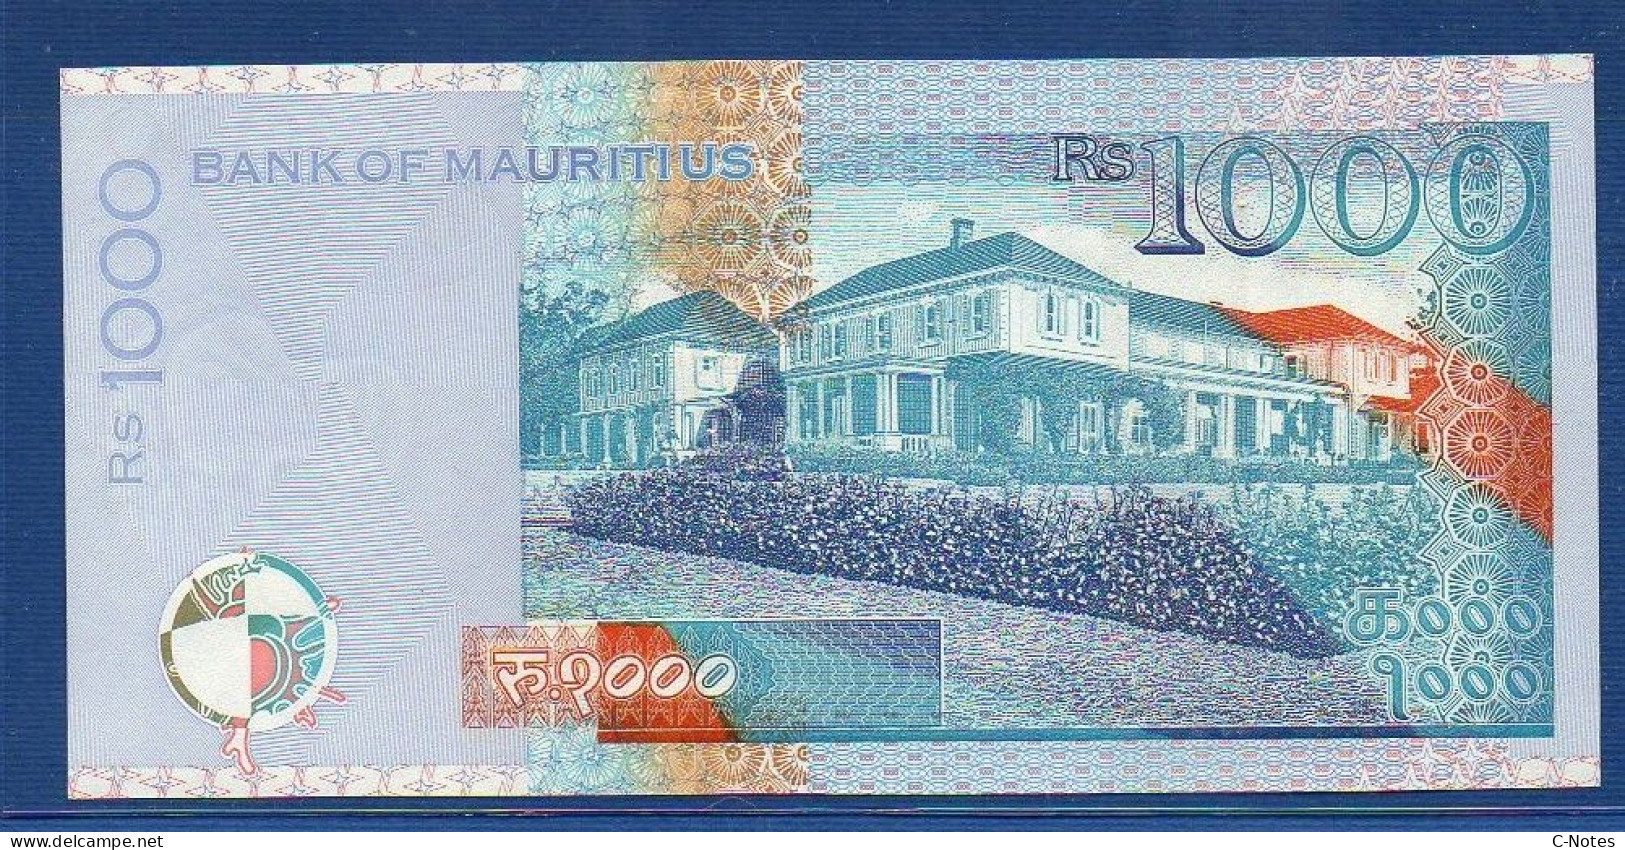 MAURITIUS - P.54a – 1000 Rupees 1999 UNC, Serie AD319117 - Mauritius